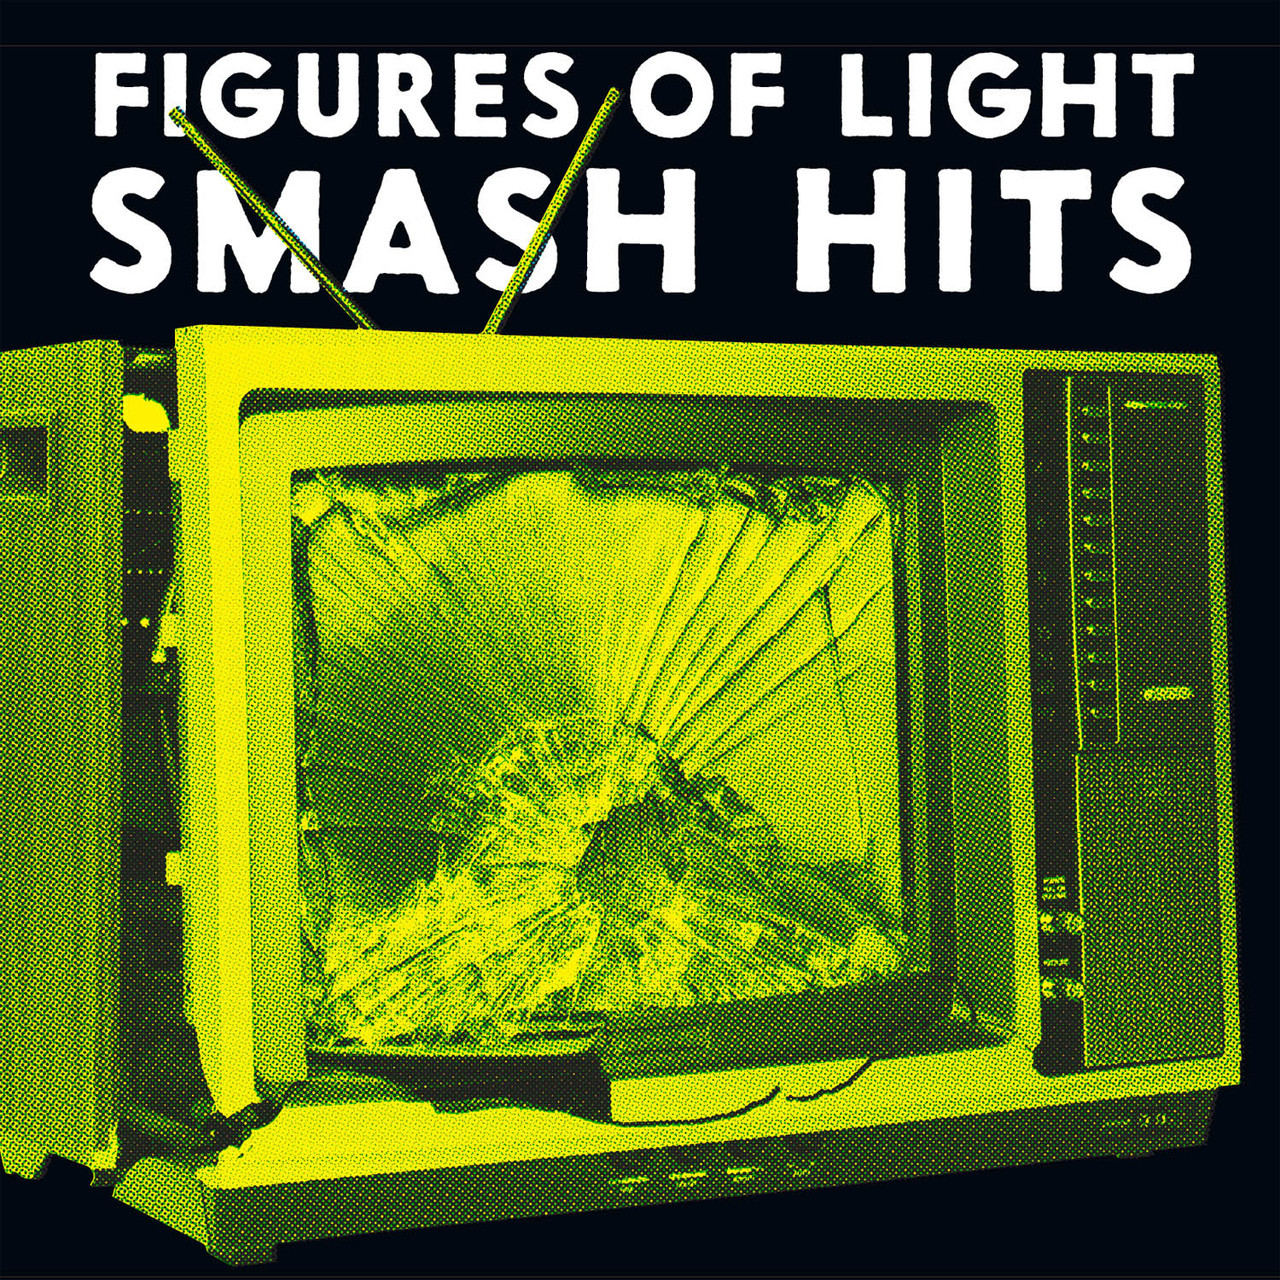 336 FIGURES OF LIGHT - SMASH HITS LP (336) - Norton Records